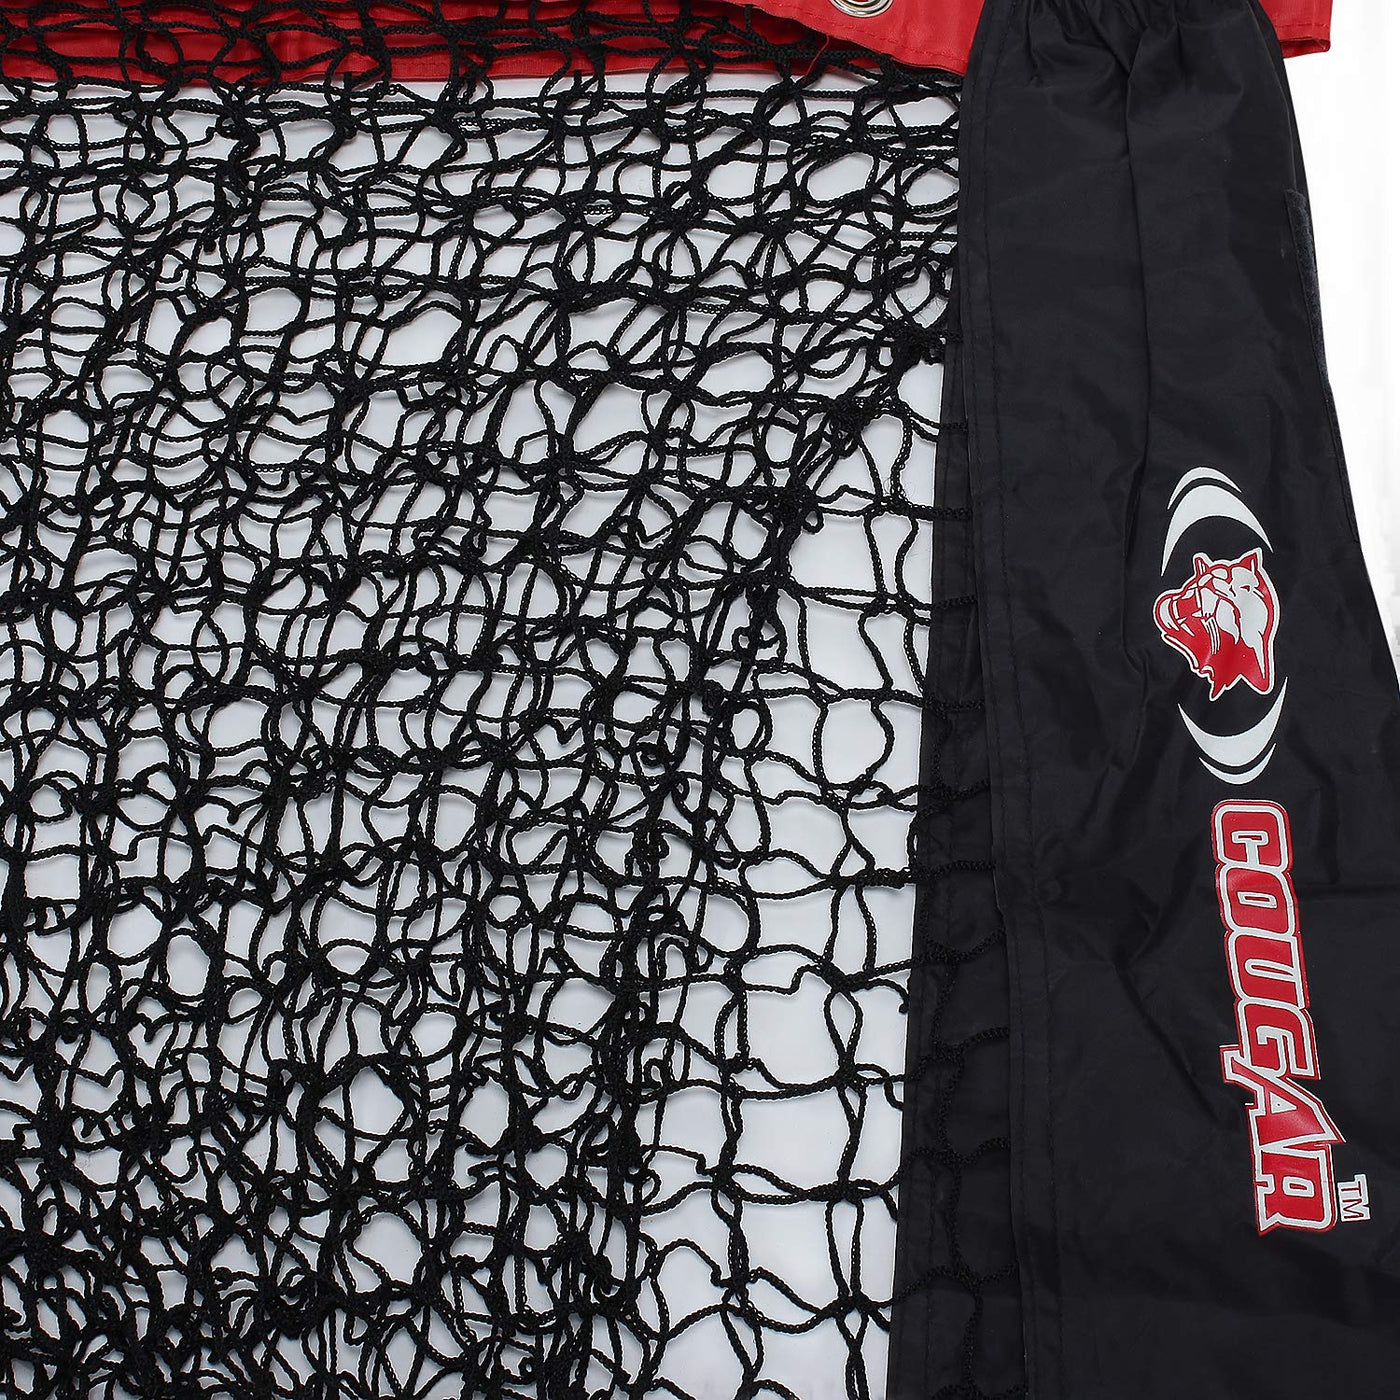 Cougar Portable Badminton Net Set with Bag TB-007